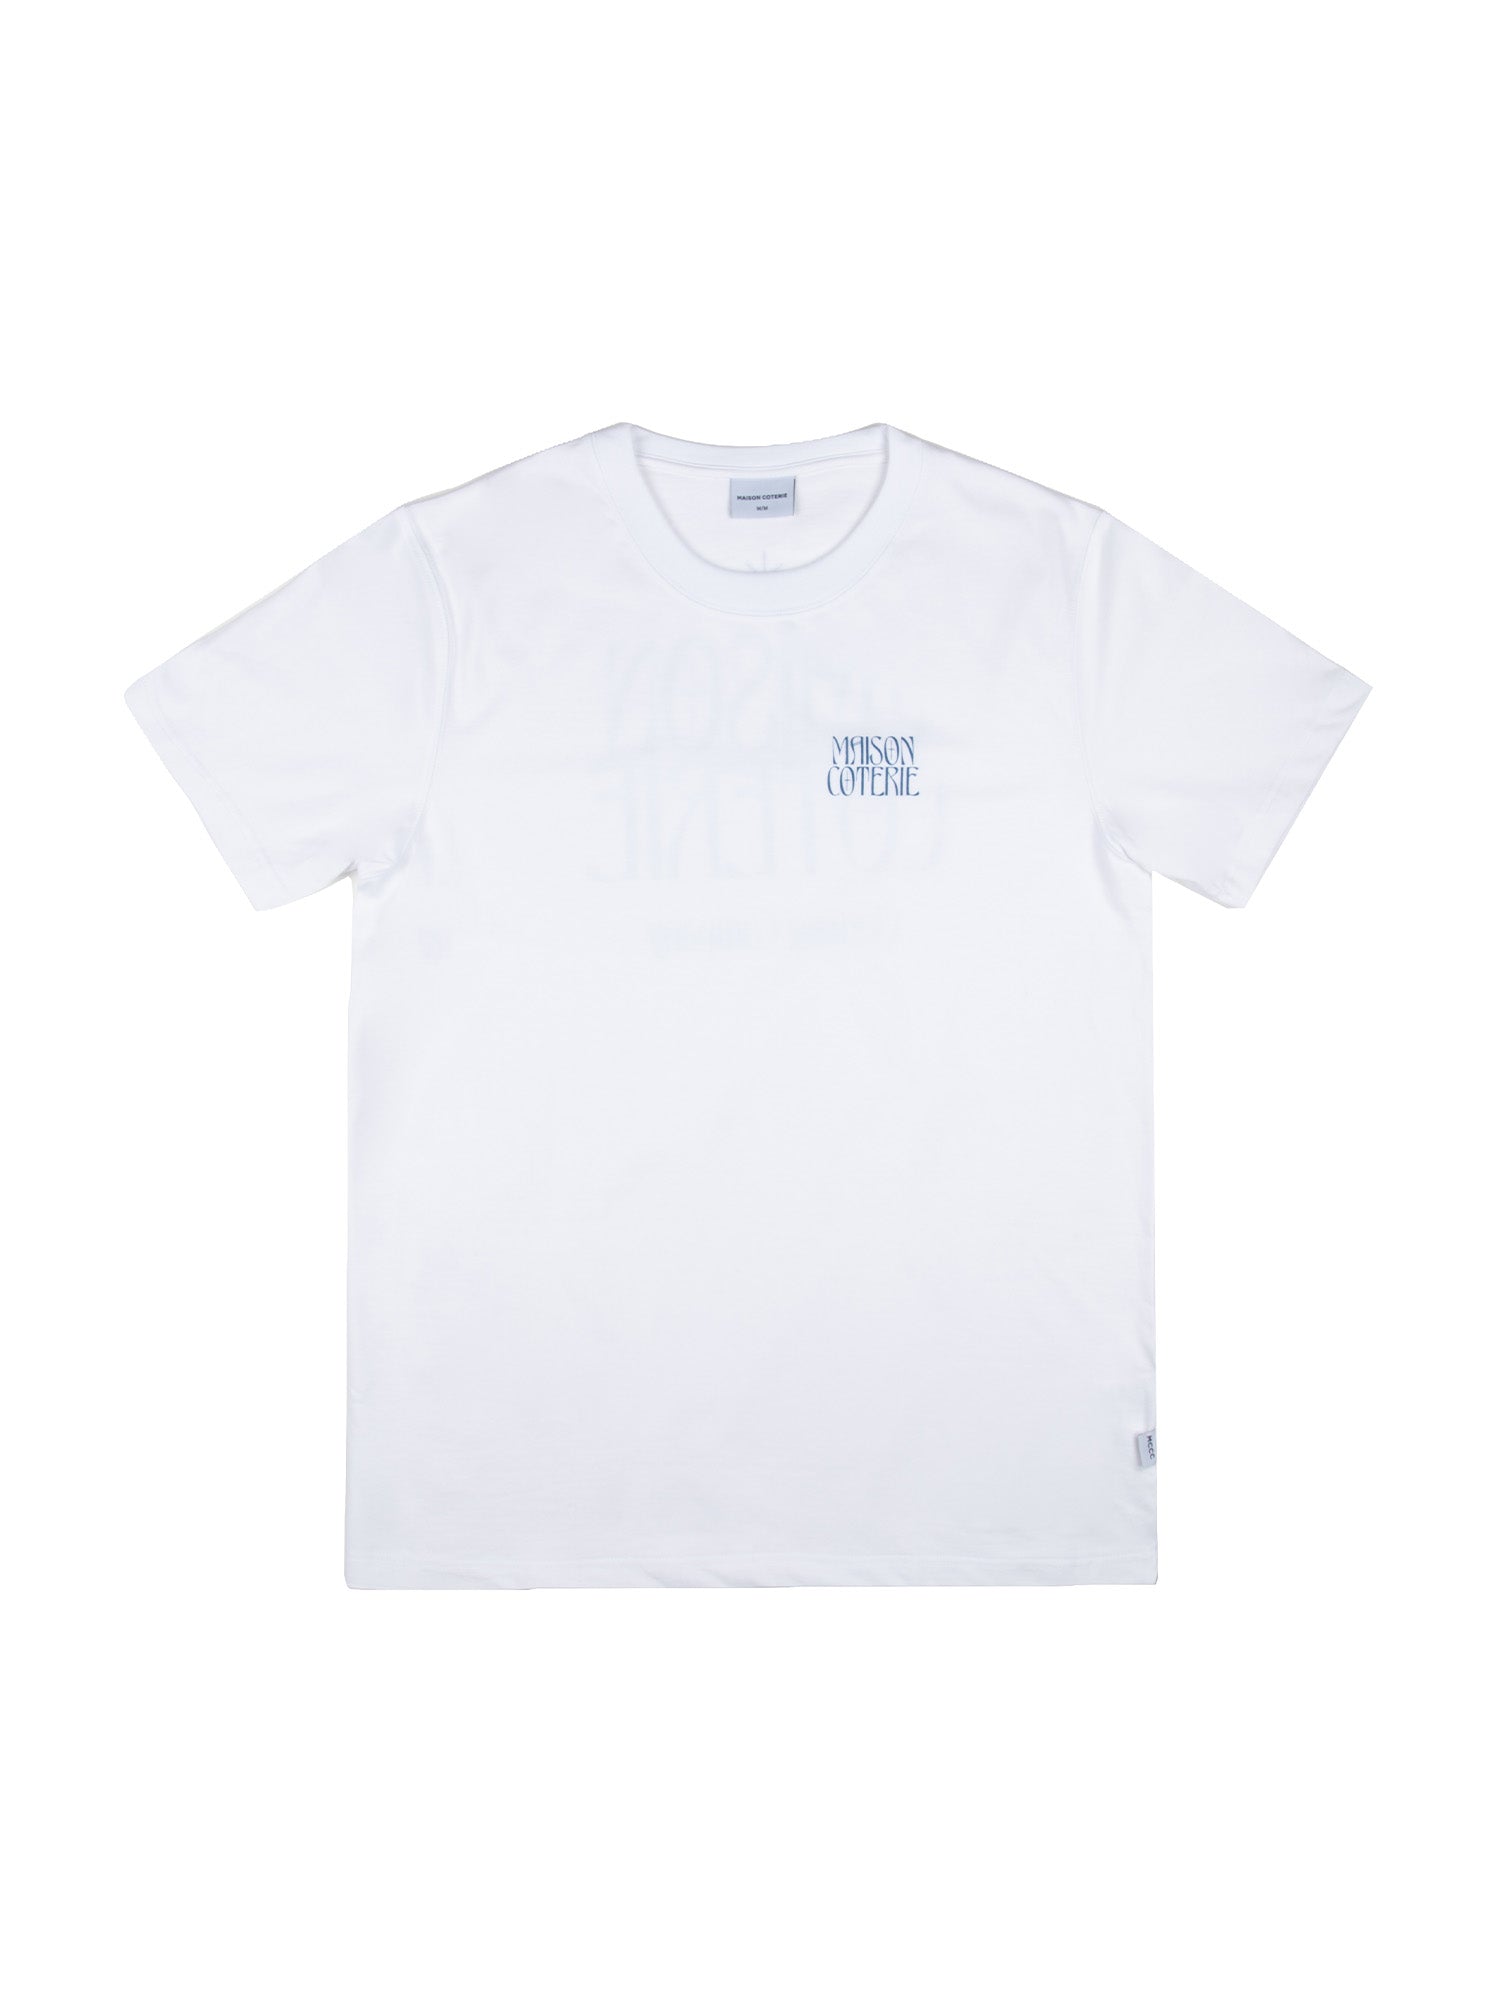 Asher - Graphic T-Shirt - White